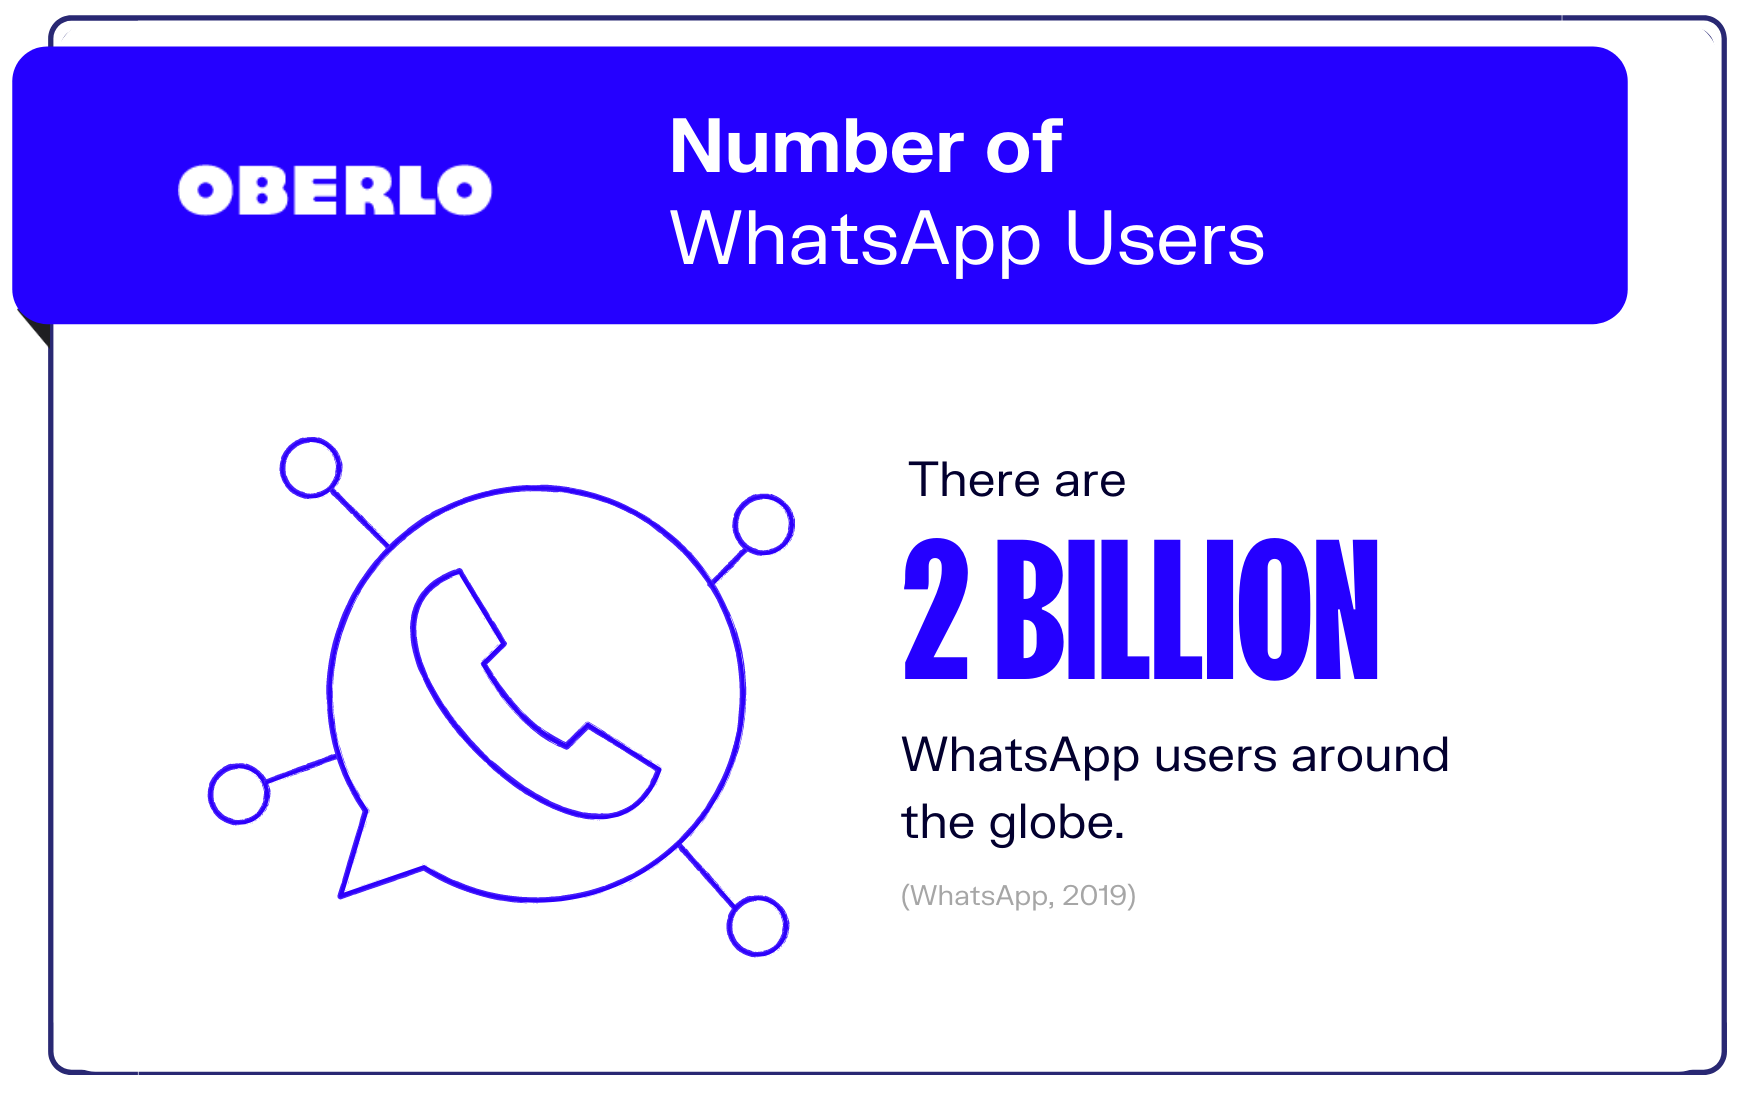 whatsapp数据图表#1